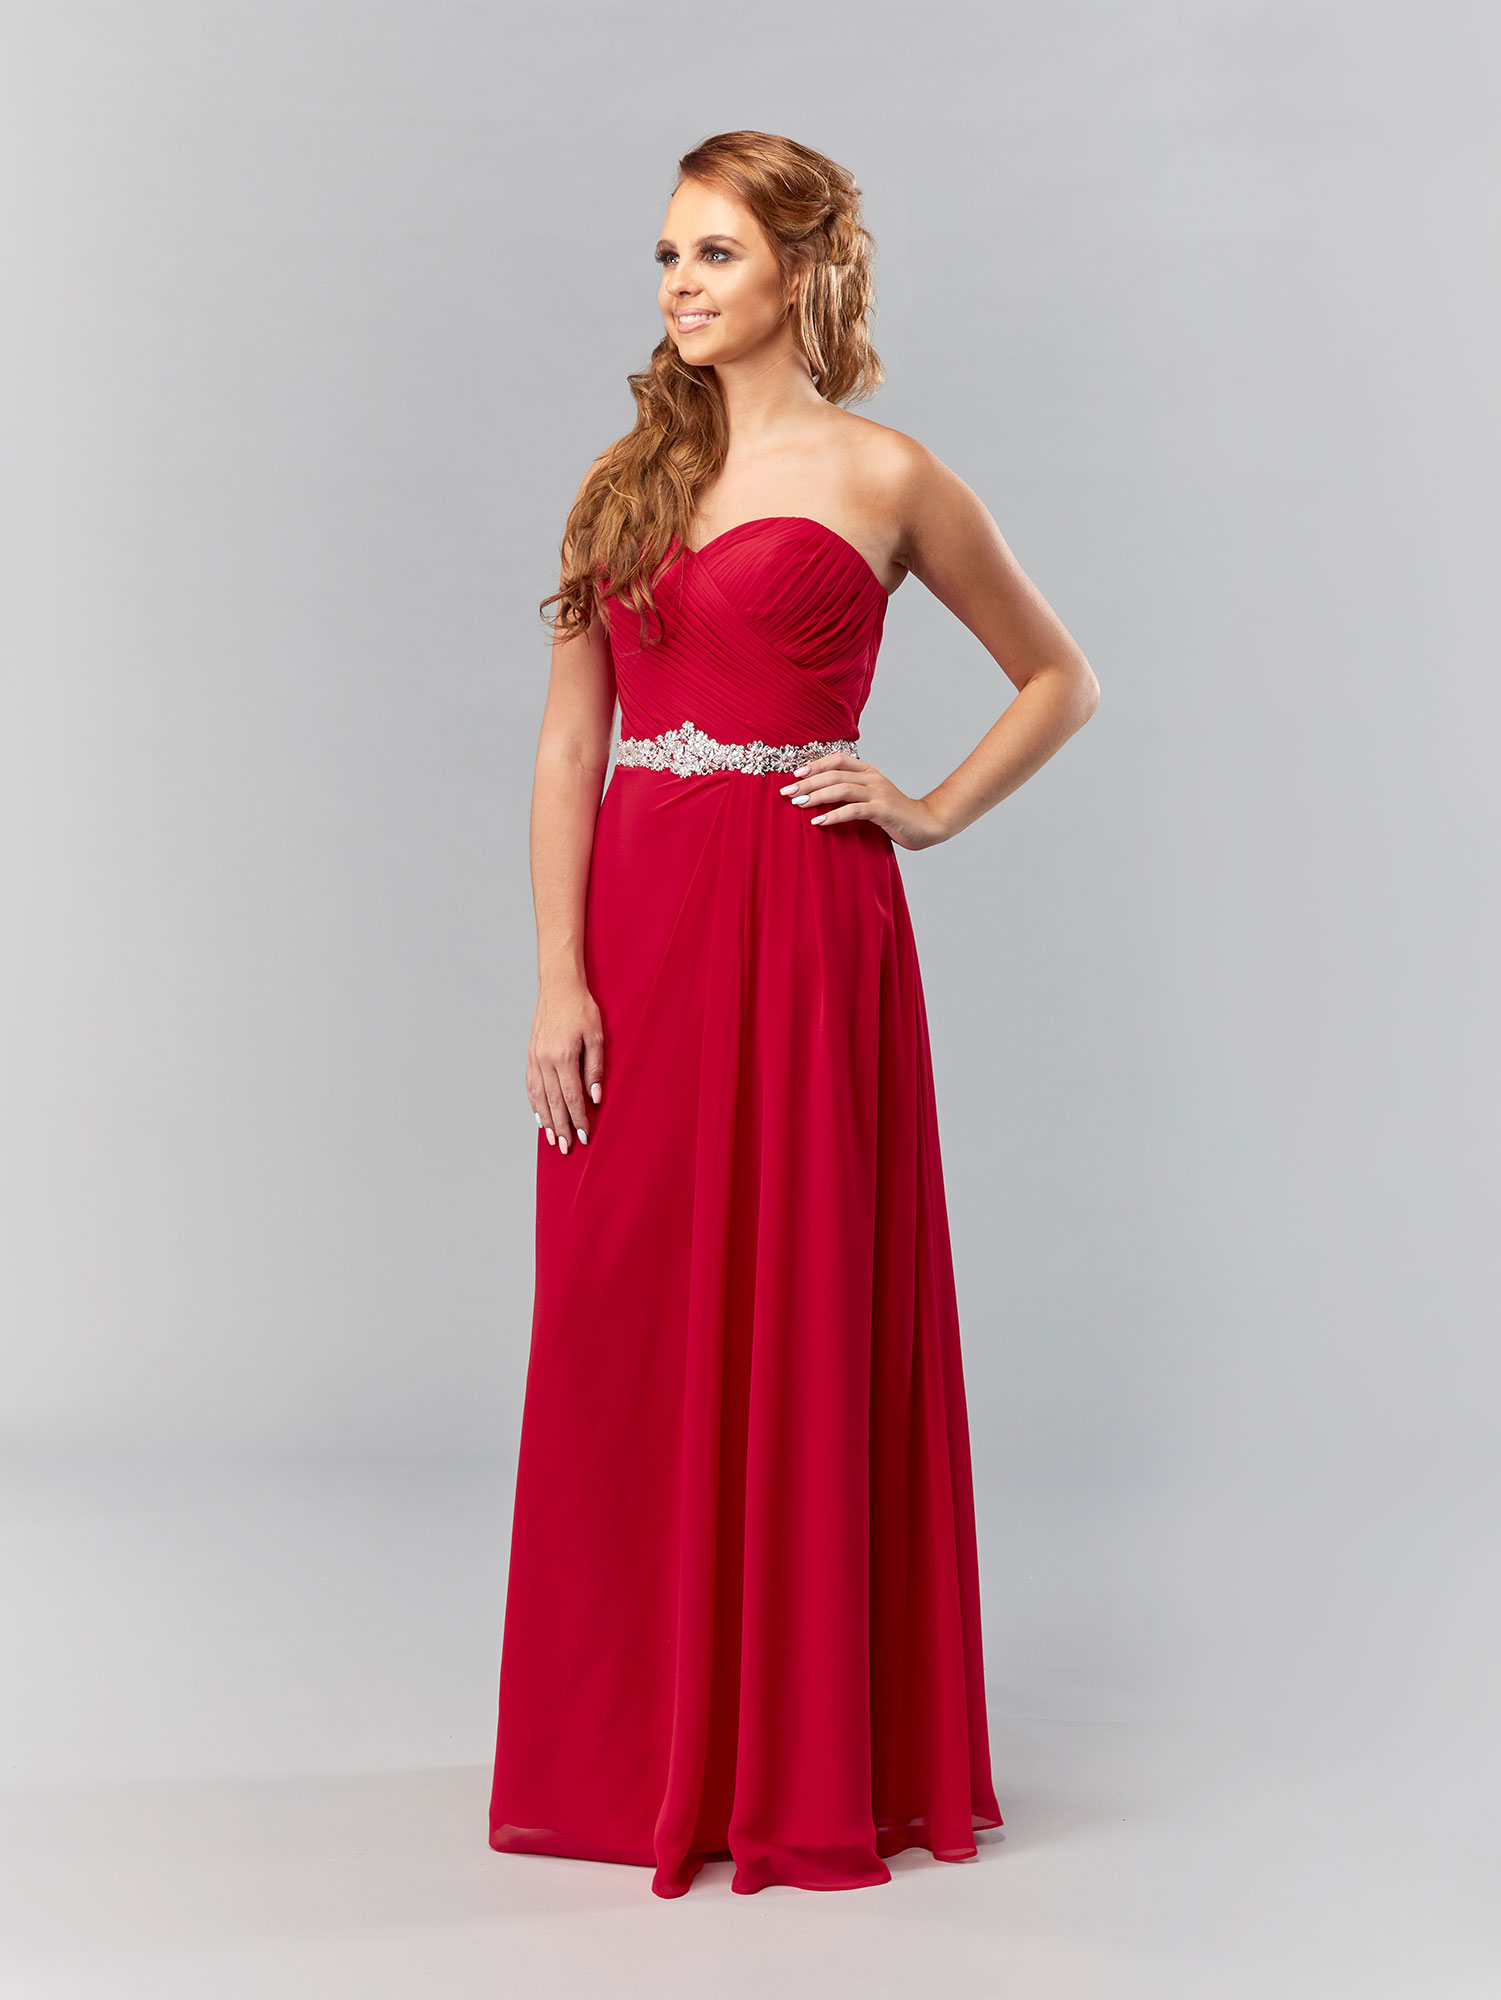 BM002 Red Strapless Chiffon Bridesmaid Dress British